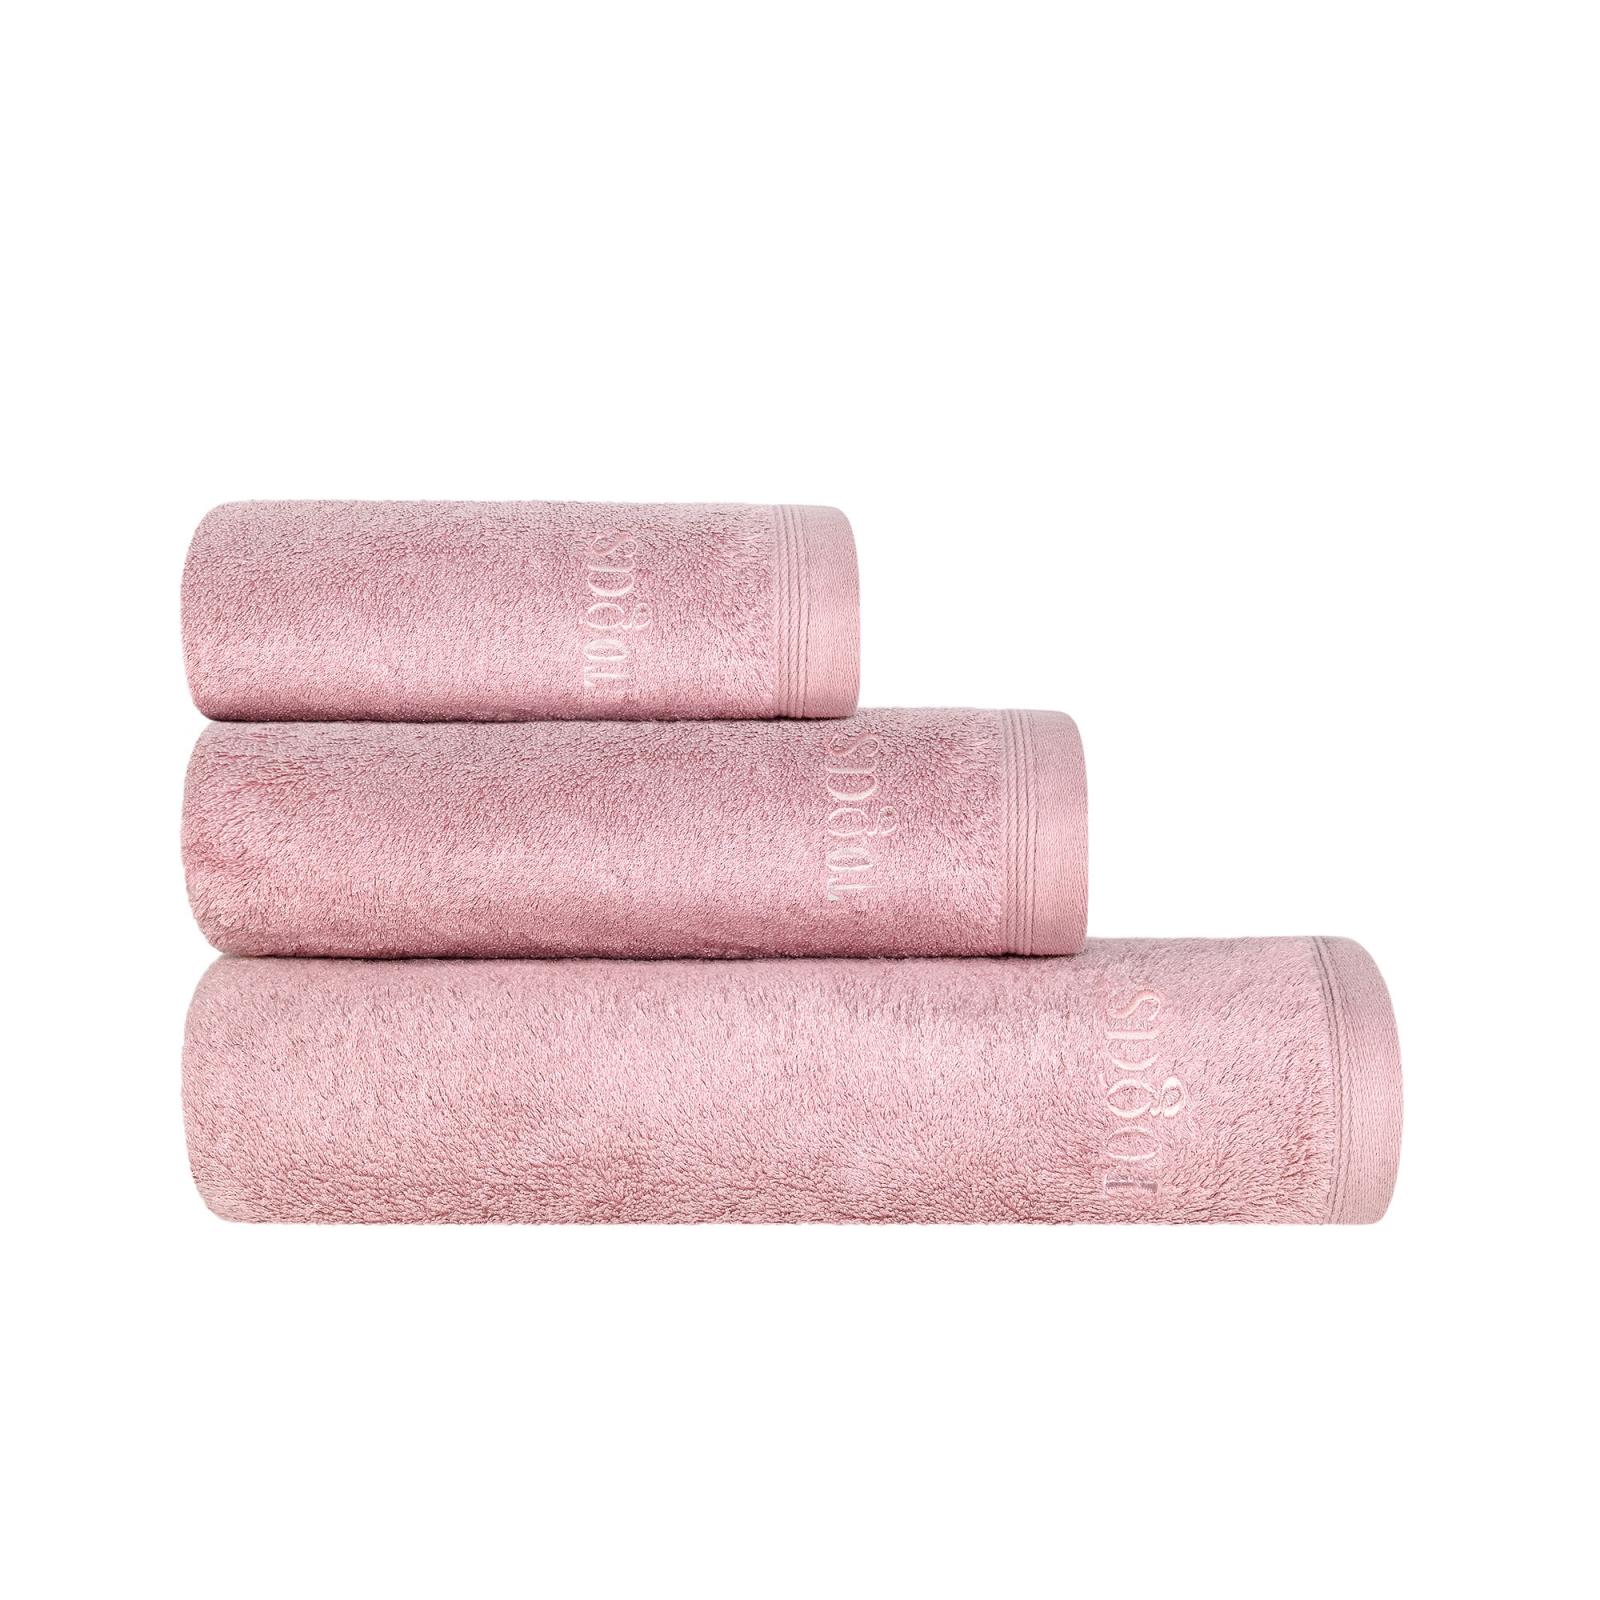 Полотенце Togas Пуатье розовое 70х140 см (10.00.01.1046) полотенце togas пуатье изумрудное 70х140